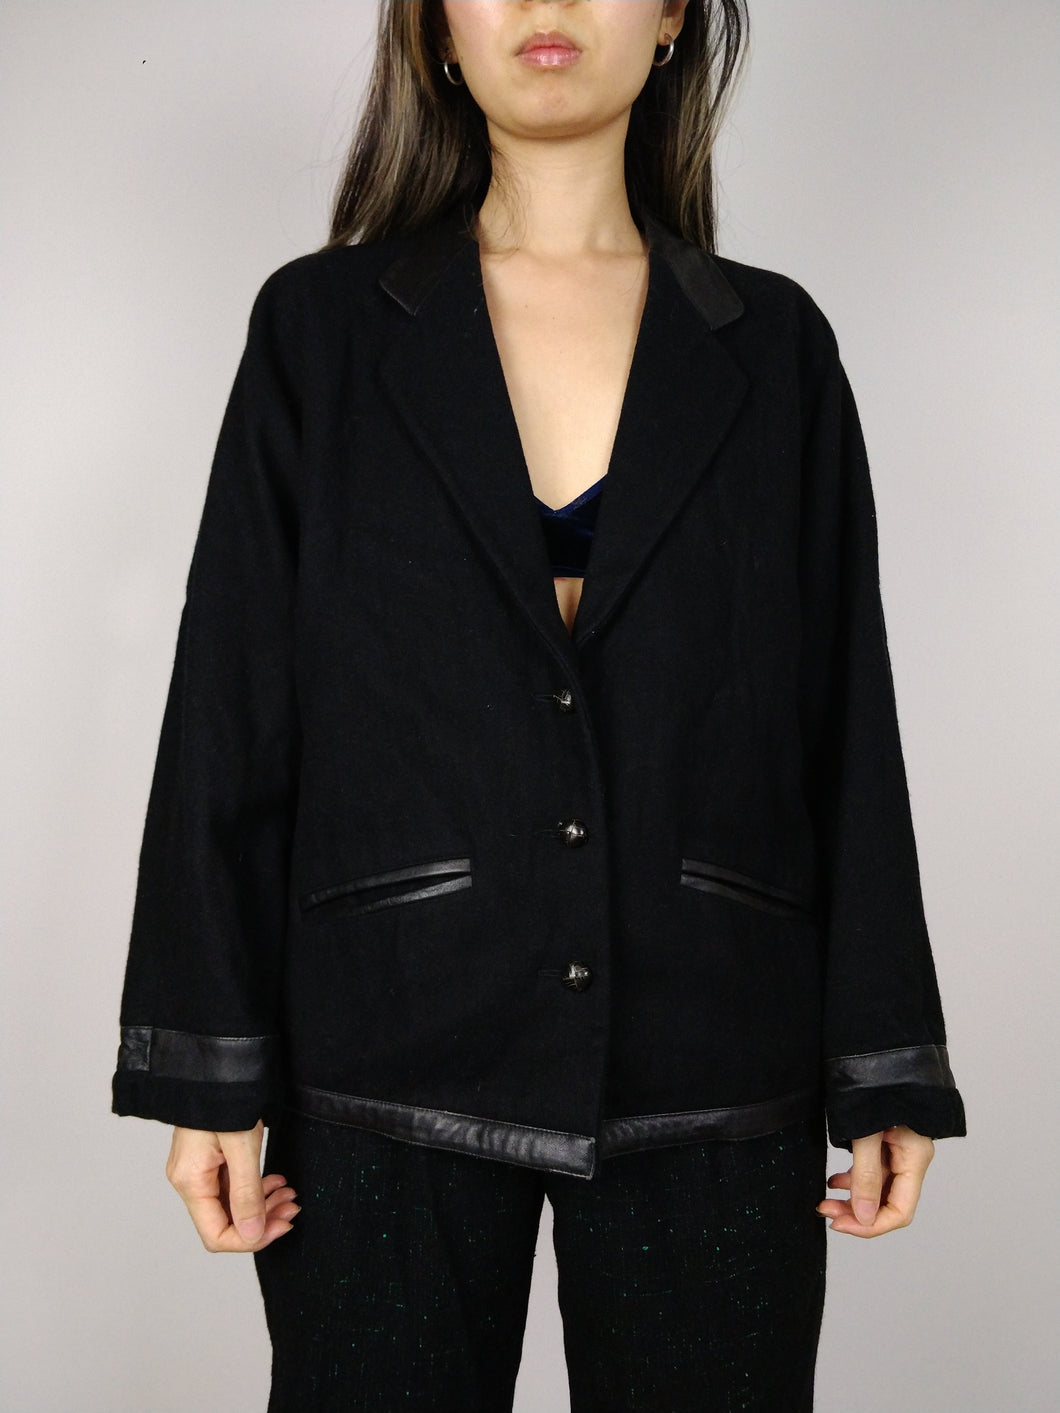 The Black Wool Blazer | Vintage wool black leather collar blazer jacket S-M